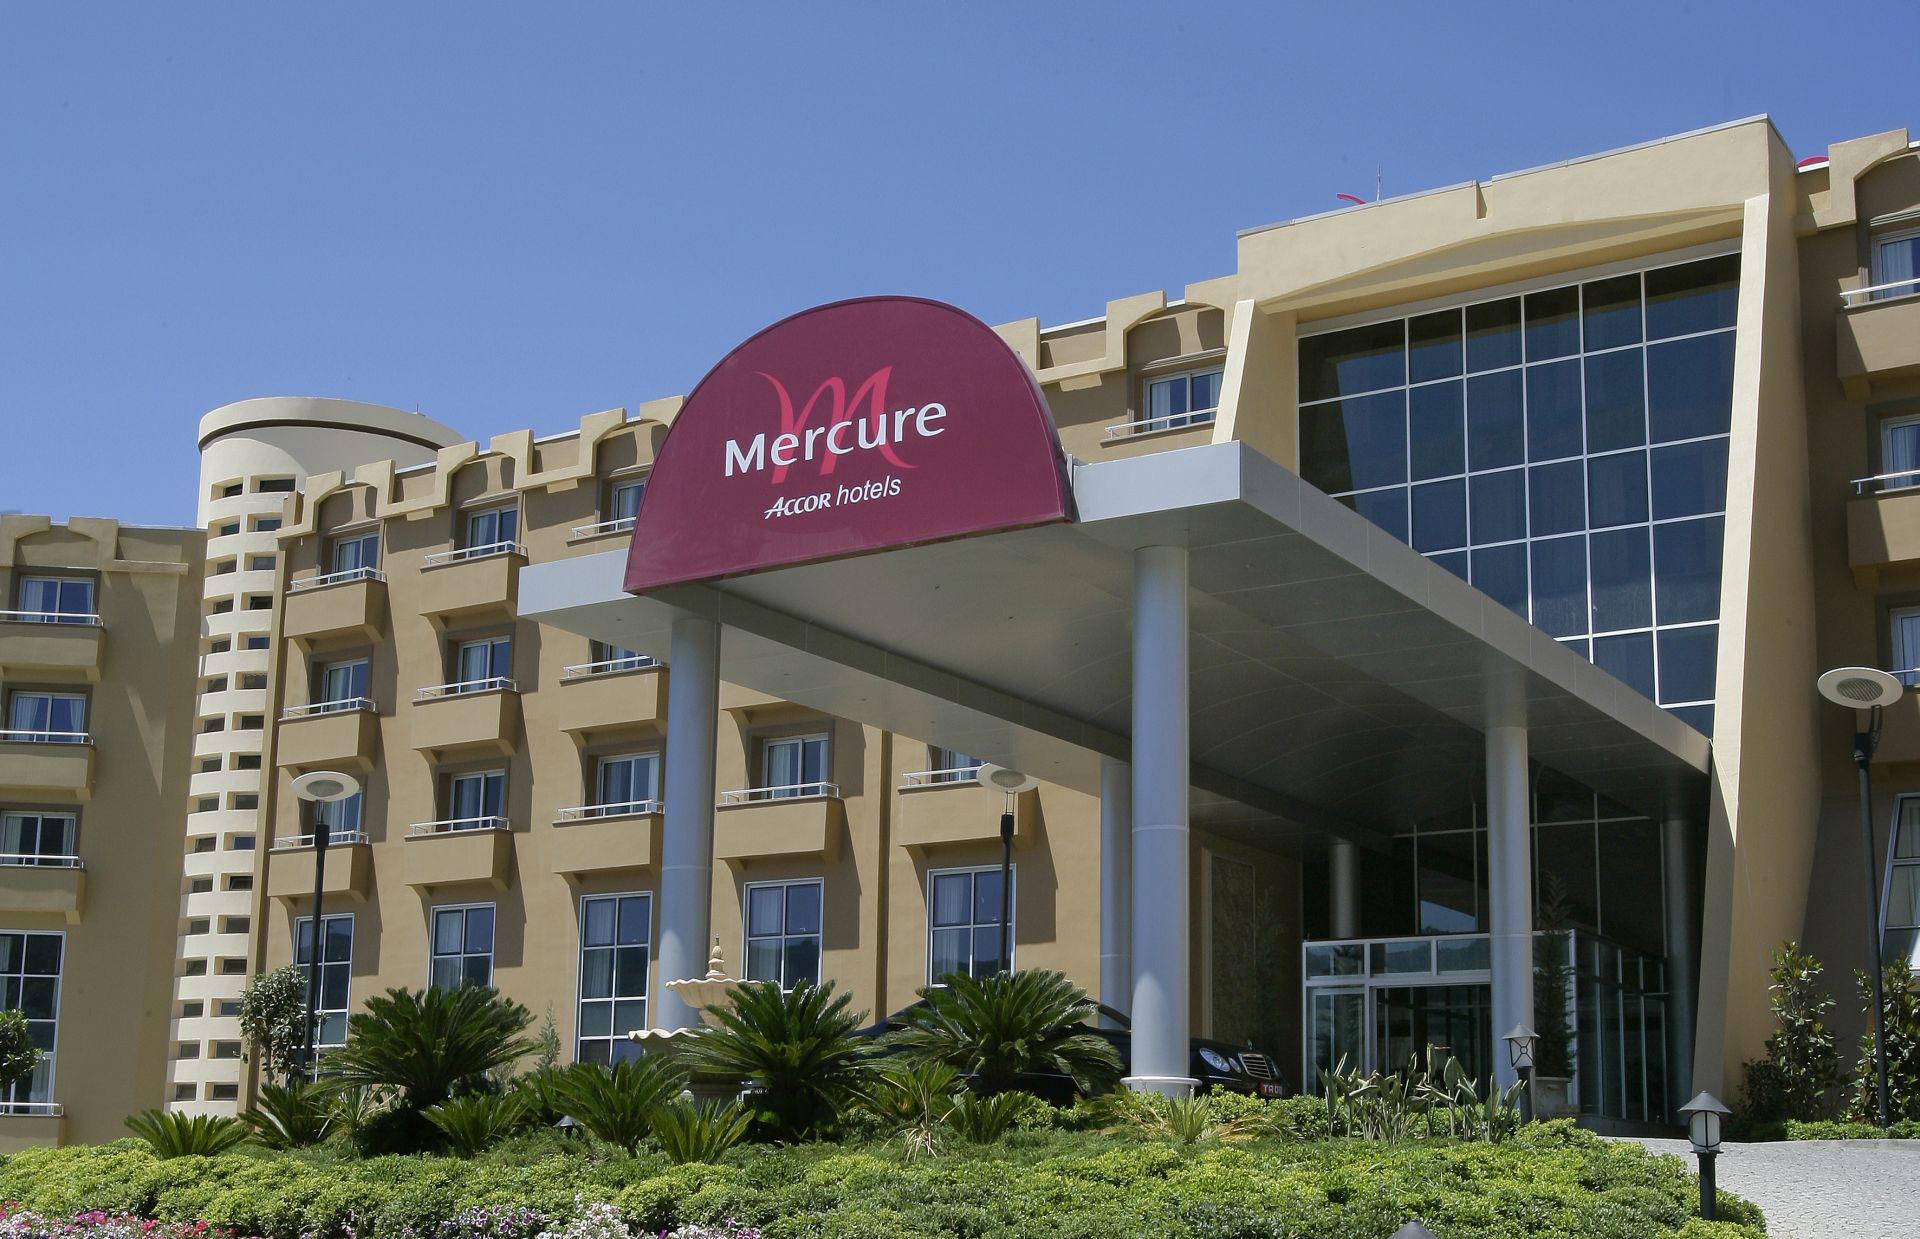 Mercure & Merit Hotels